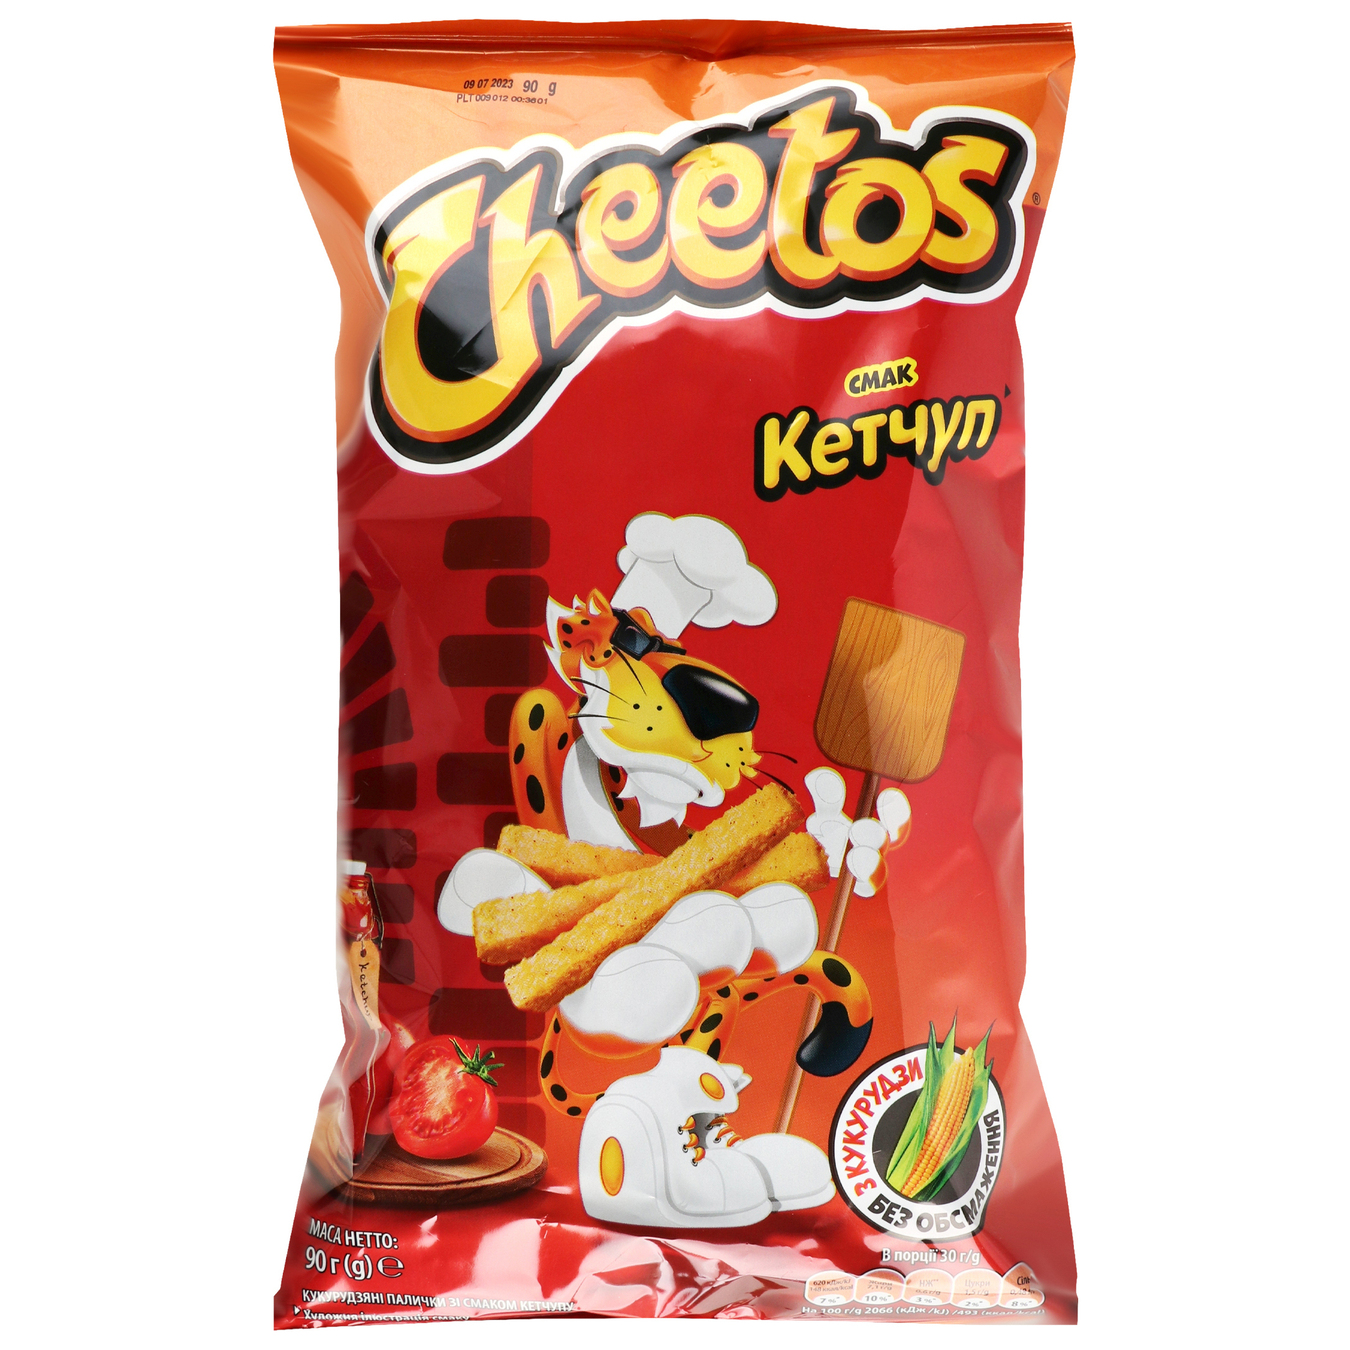 Cheetos corn sticks with ketchup flavor 90g